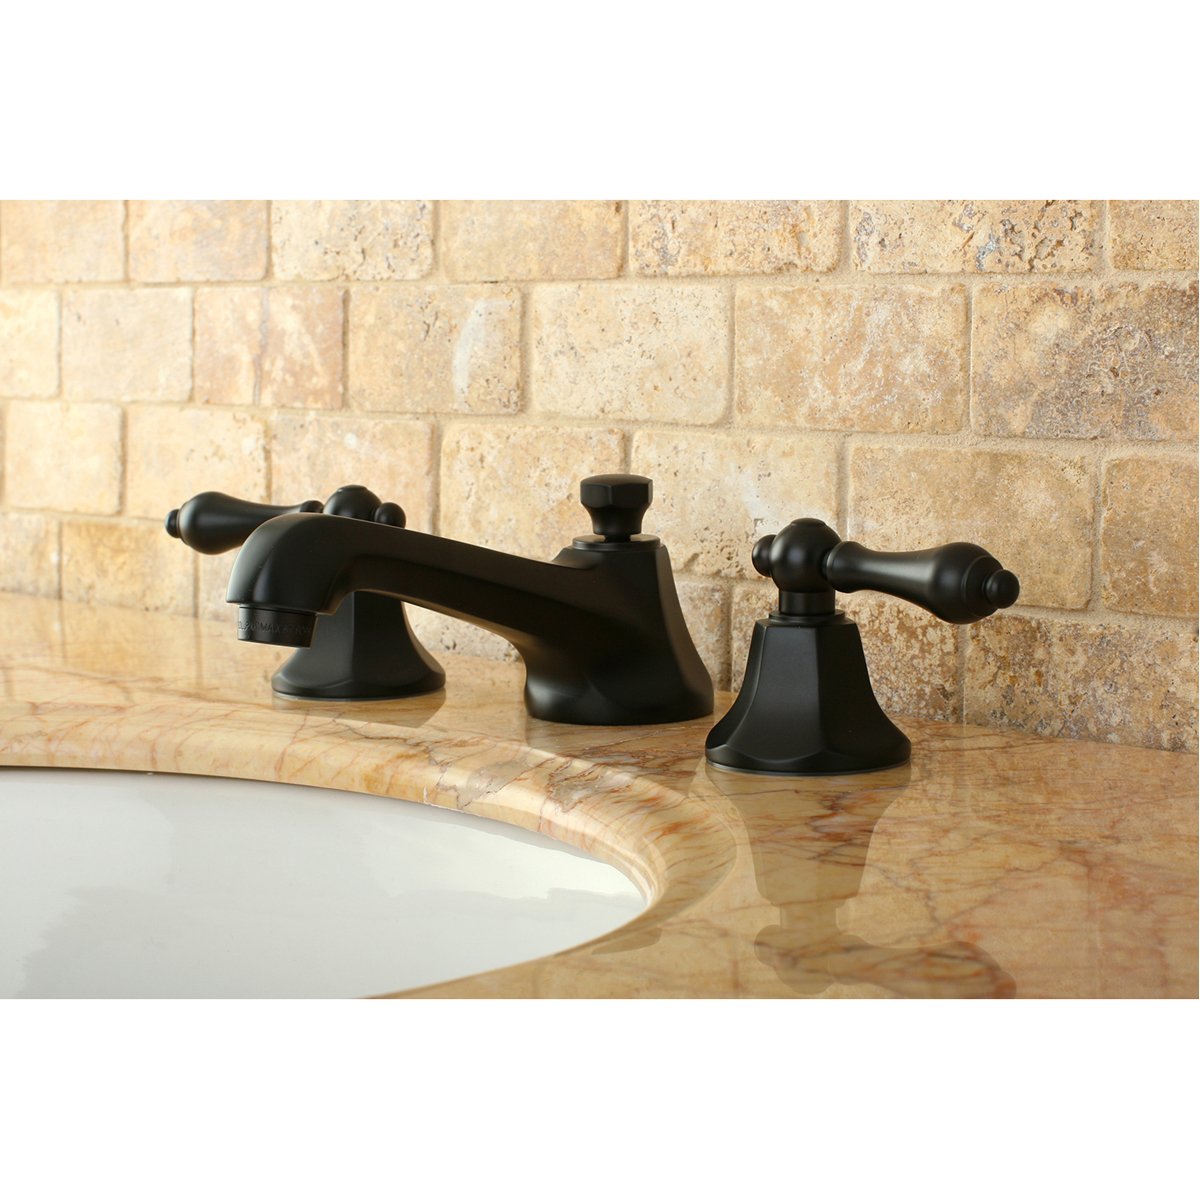 Kingston Brass Metropolitan 8-Inch Widespread Bathroom Faucet